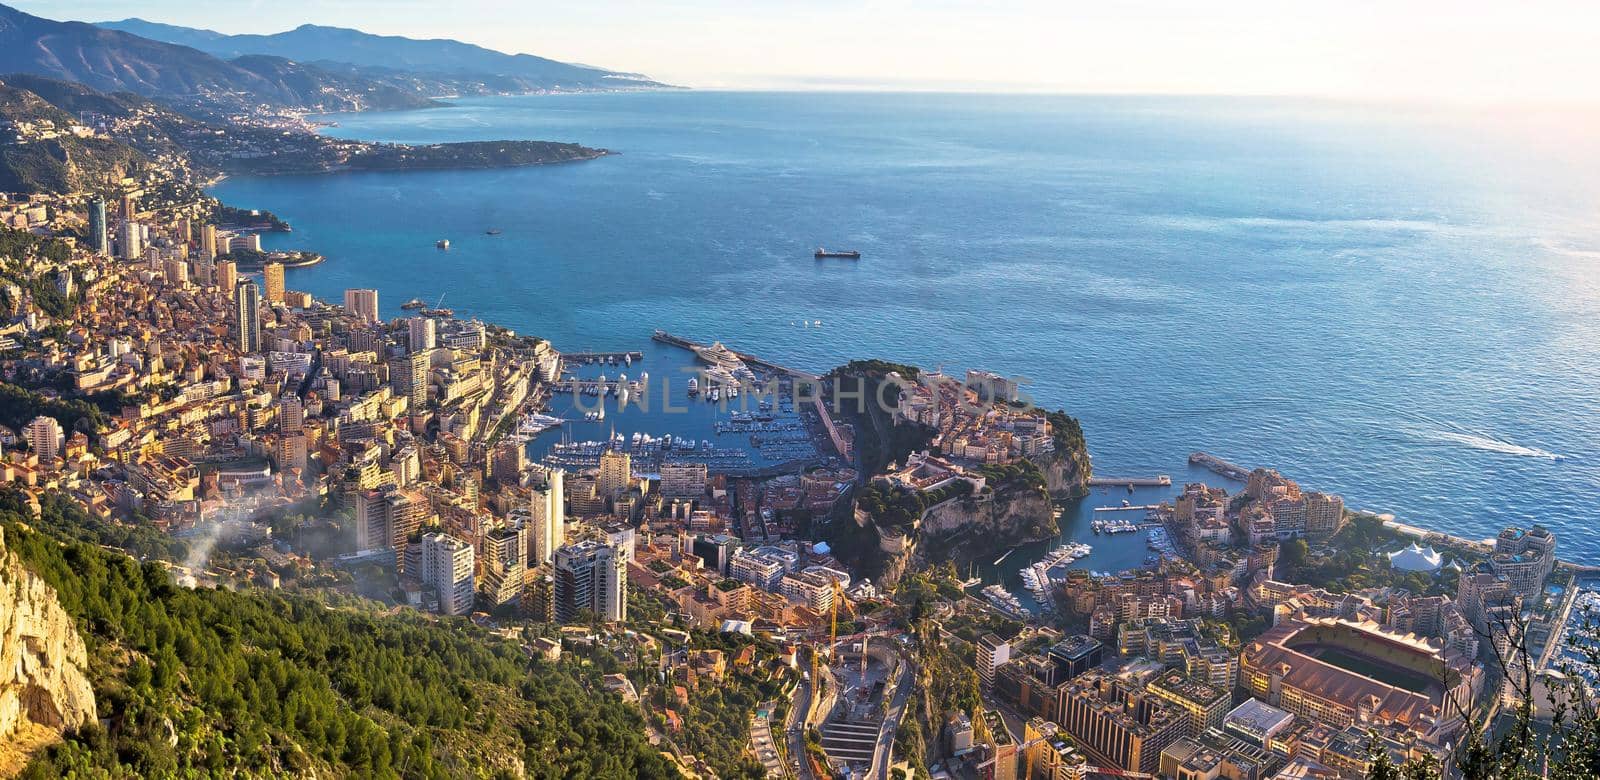 Principality of Monaco aerial panoramic coastline view by xbrchx